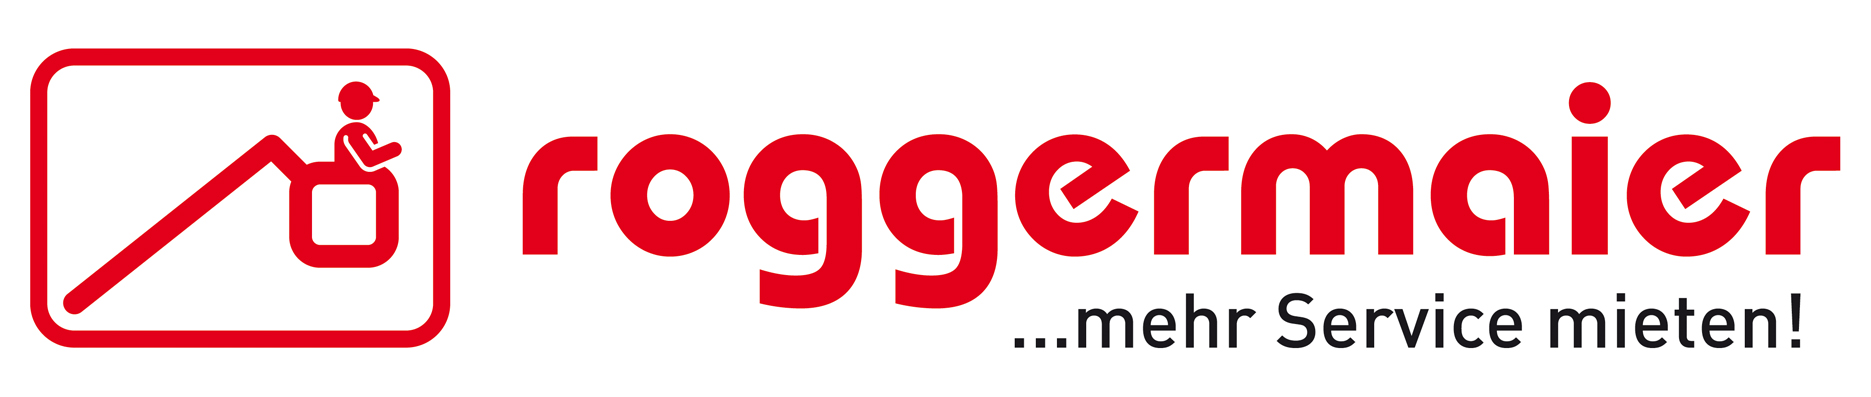 Logo_roggermaier_GmbH